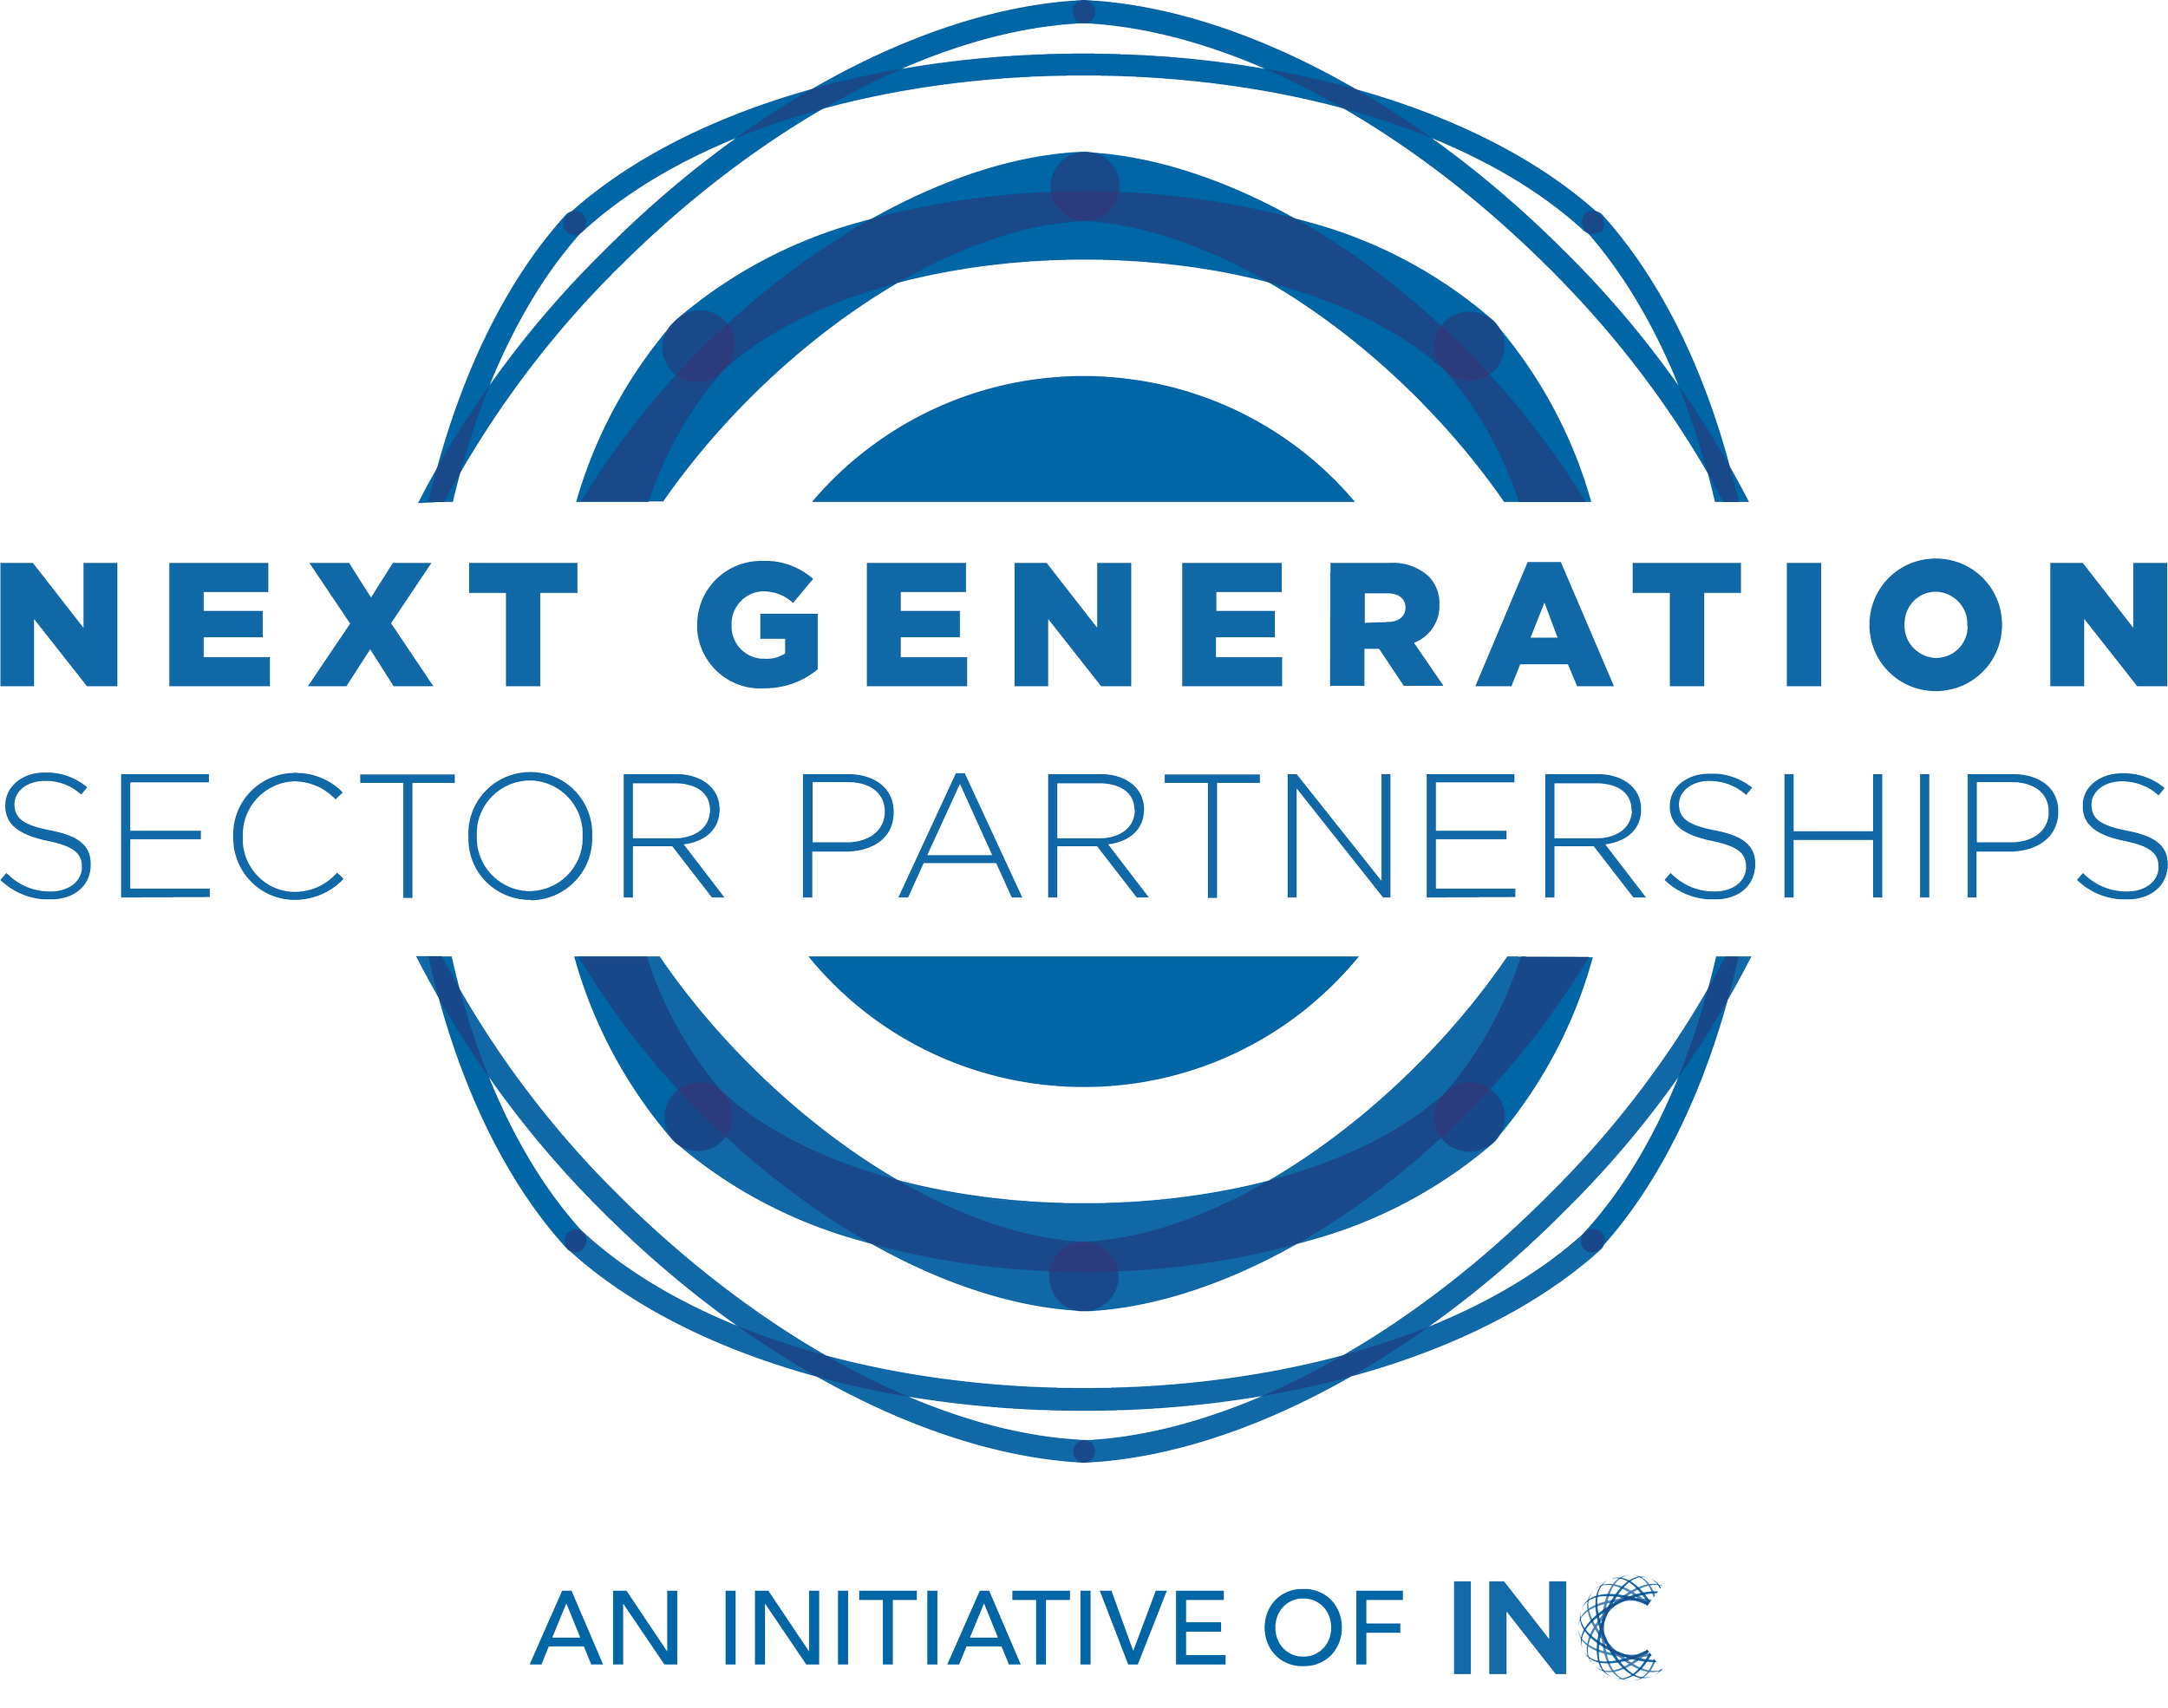 Next Generation Sector Partnership Community of